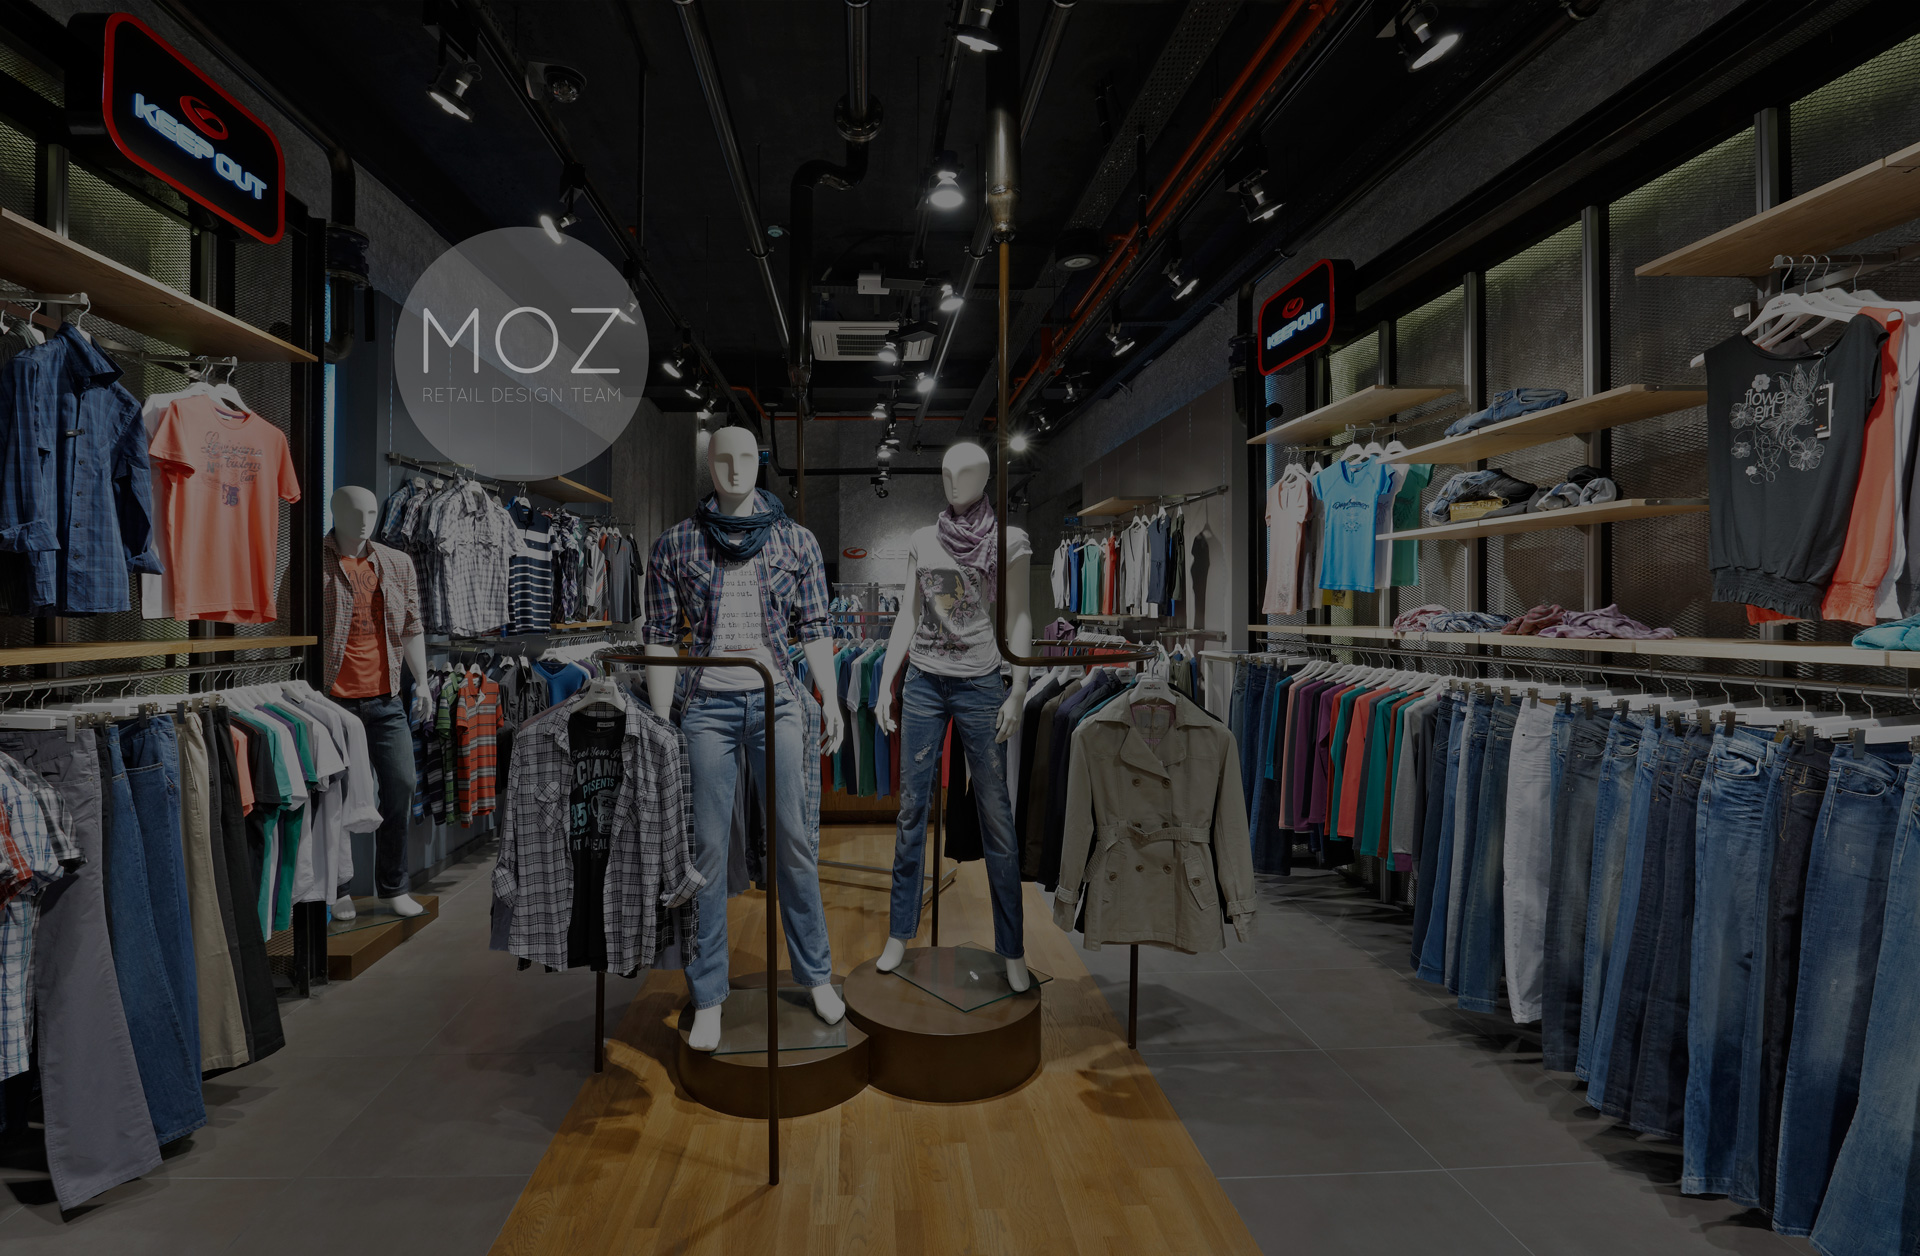 MOZ Retail Design Team | İç Mimarlık Firması